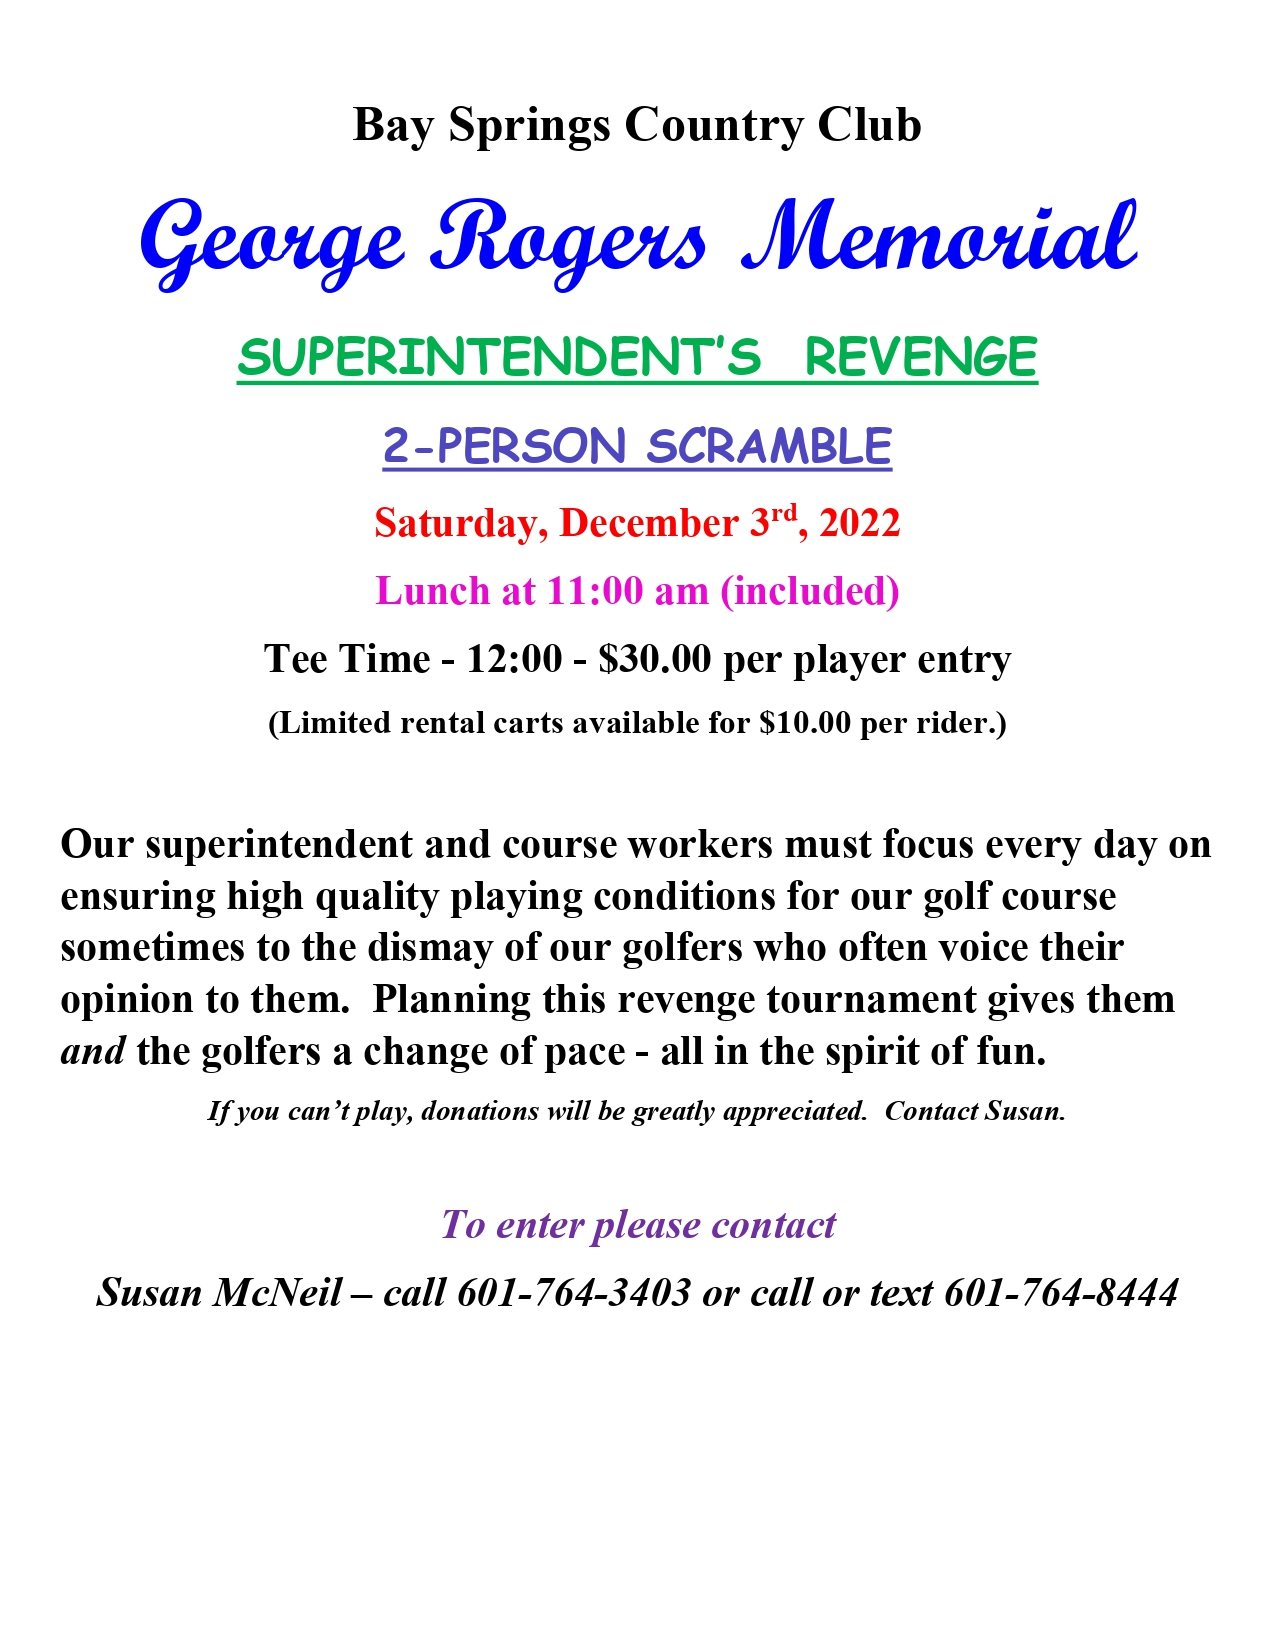 George Rogers Memorial Superintendent's Revenge 2-Person Scramble